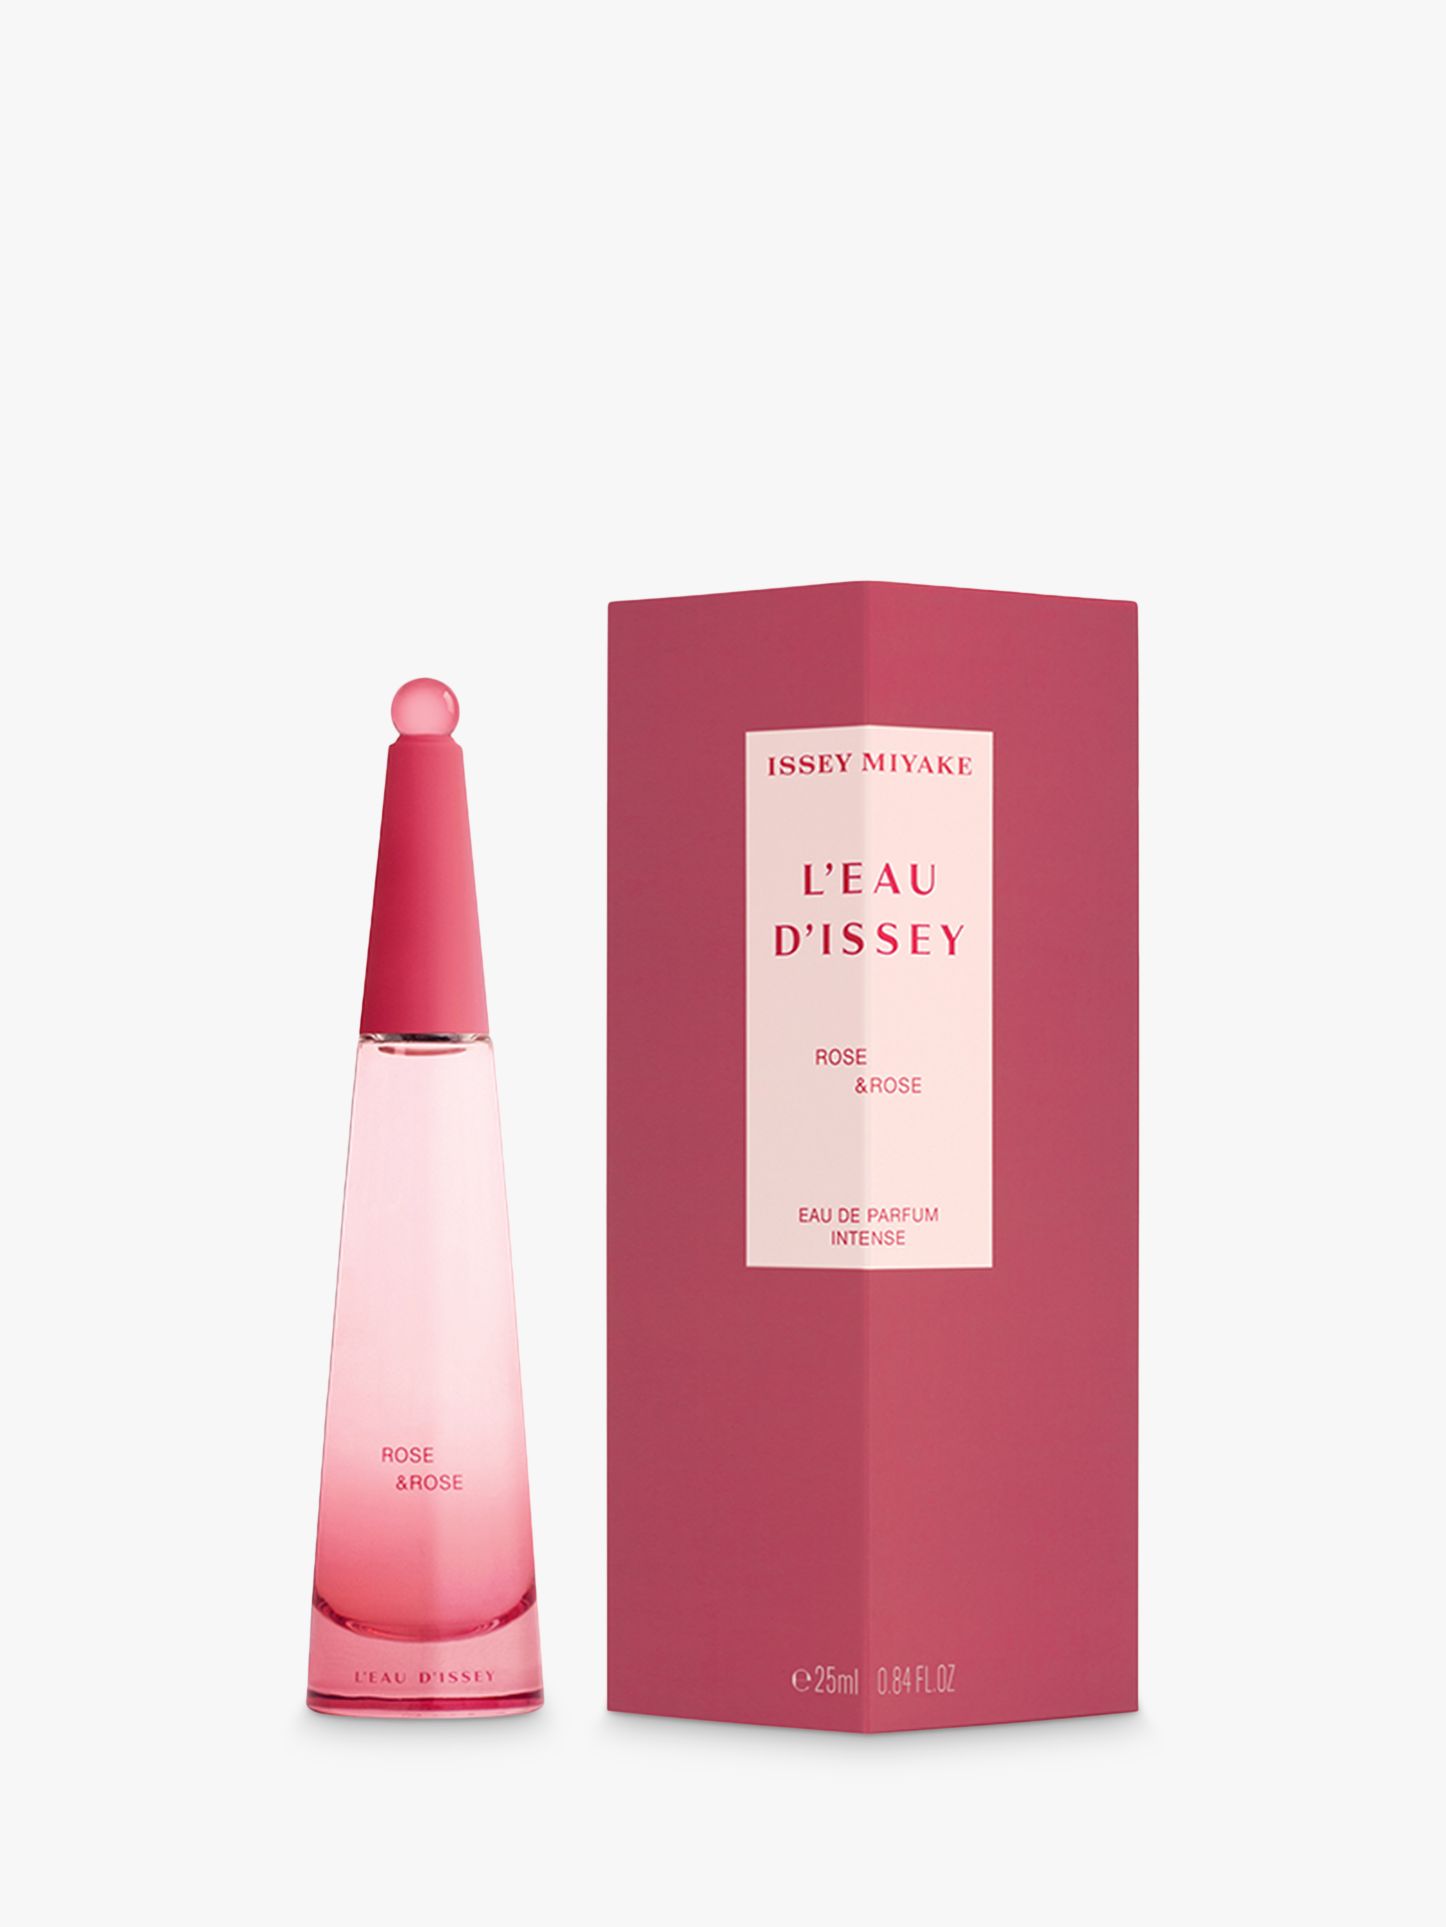 Issey Miyake L'Eau d'Issey Rose & Rose Eau de Parfum Intense, 90ml